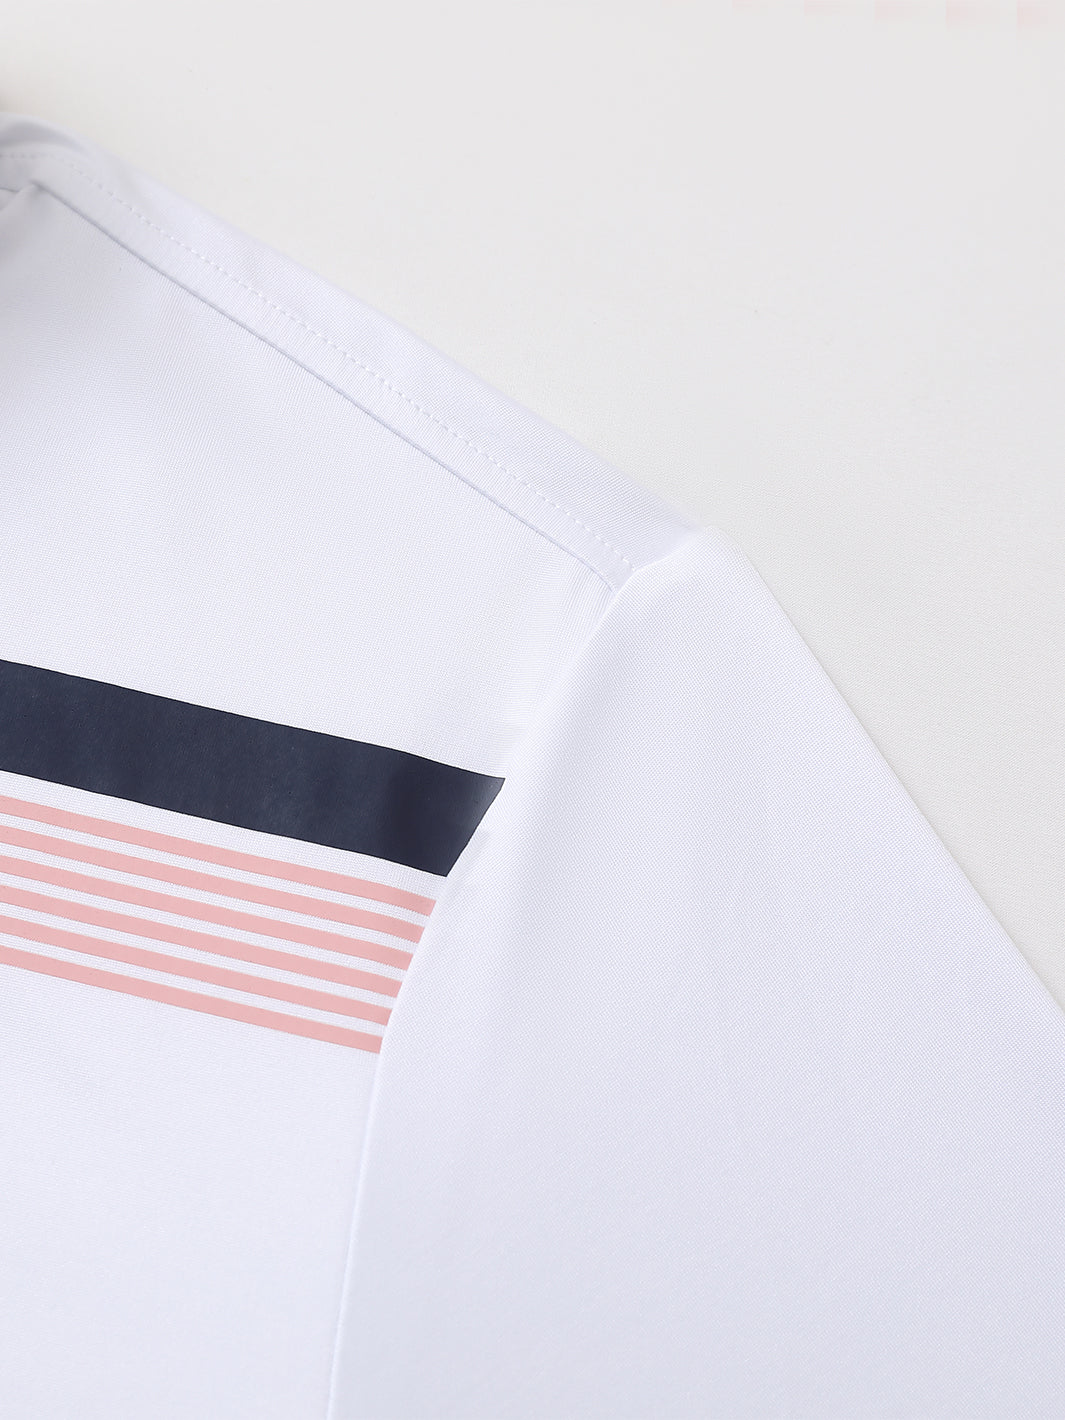 Men's Striped Print Golf Polo Shirts-White3